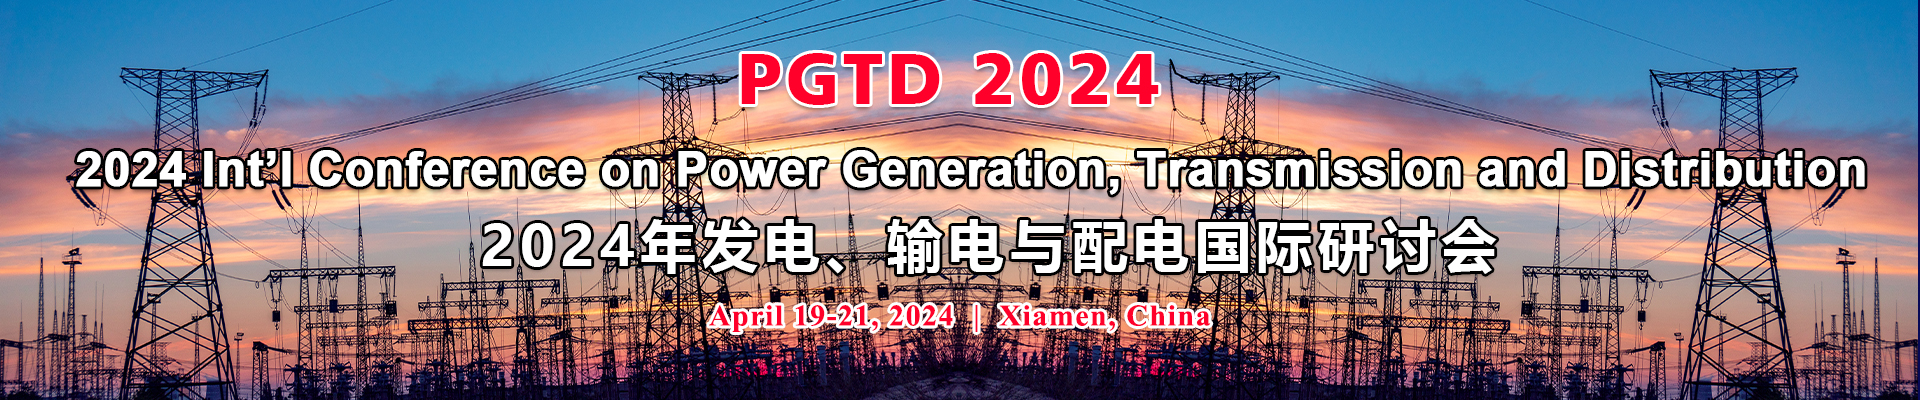 2024 Int’l Conference on Power Generation, Transmission and Distribution (PGTD 2024), Xiamen, Fujian, China